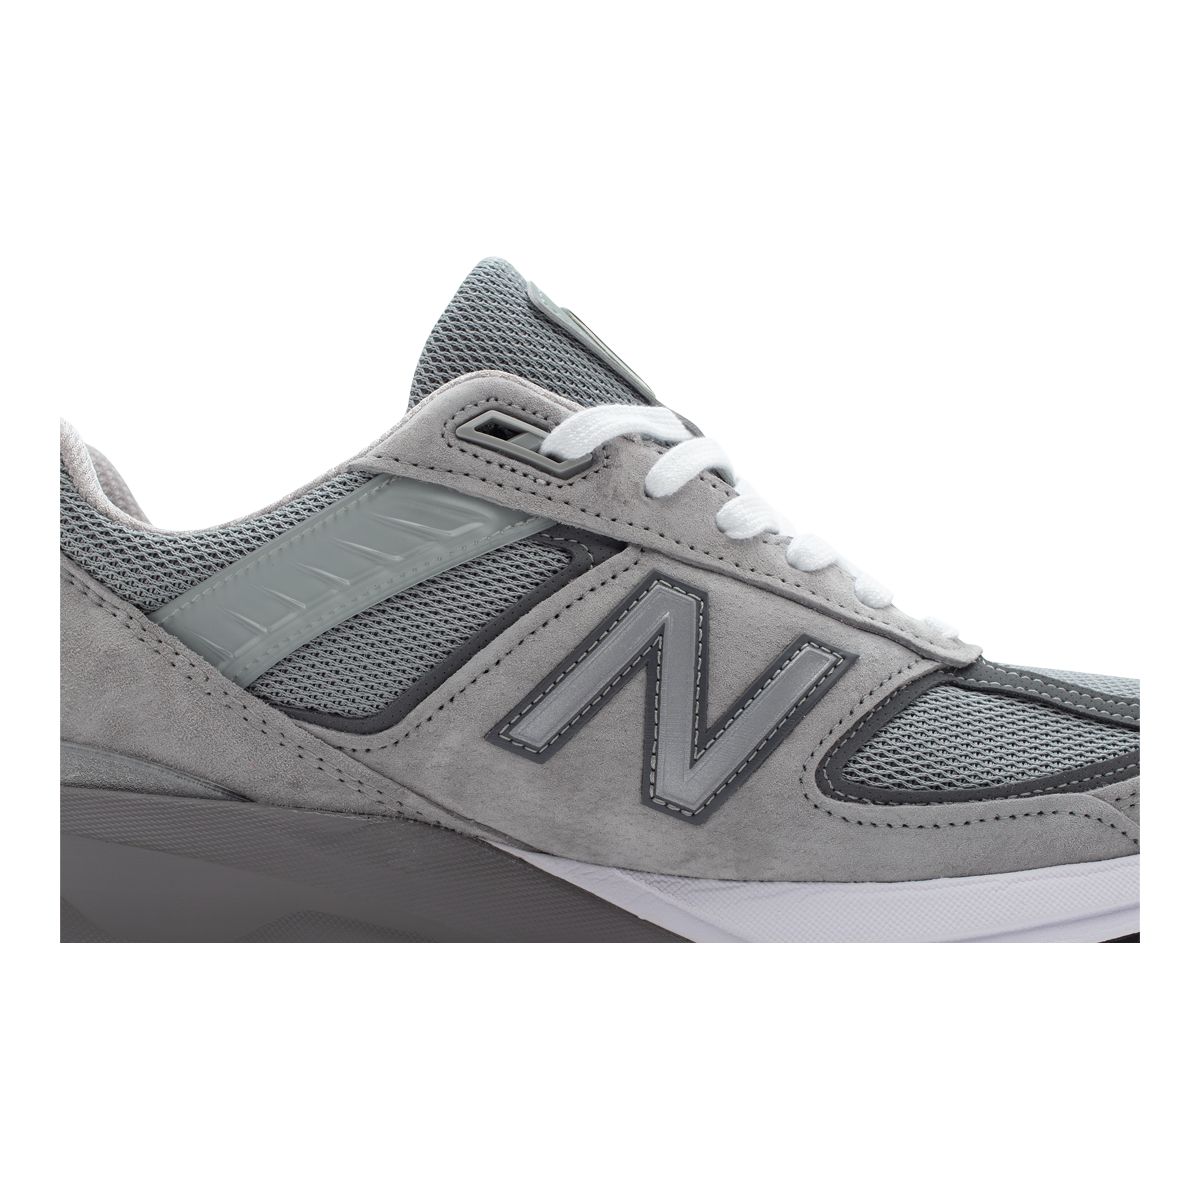 New Balance Men's 990v5 Running Shoes | Sportchek